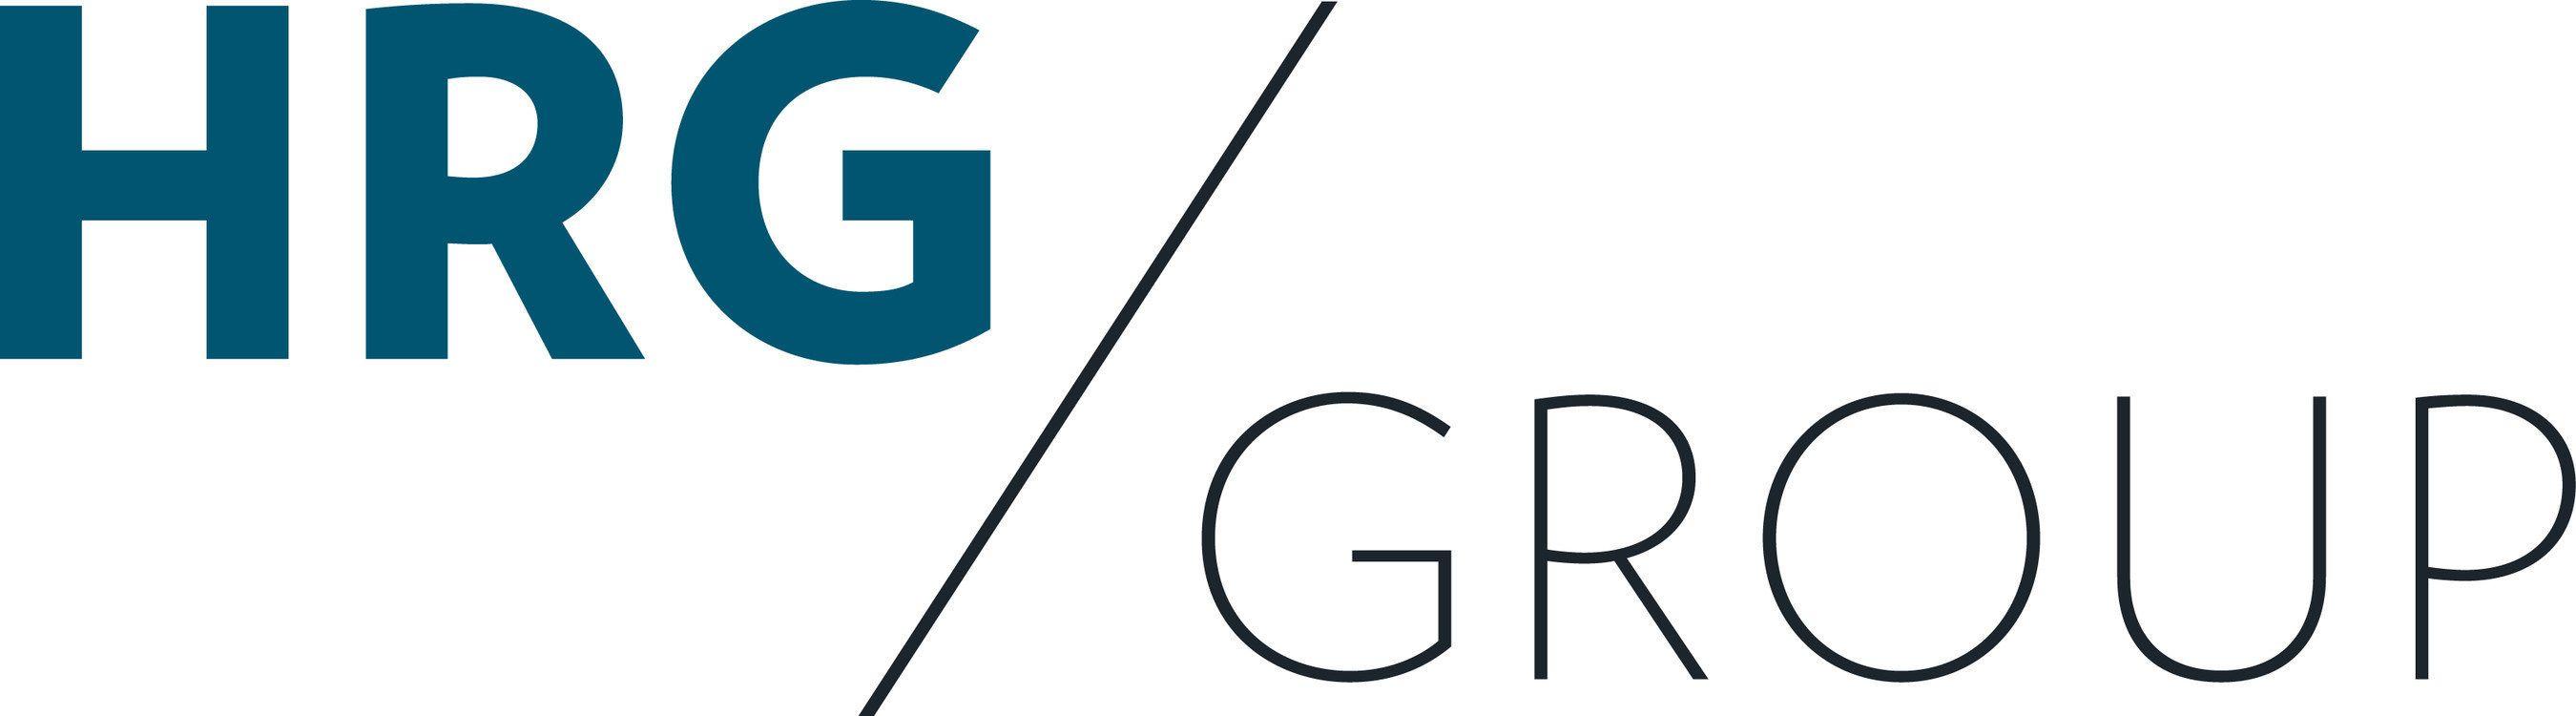 HRG Logo - Harbinger Group Names Omar Asali as its Chief Executive Officer